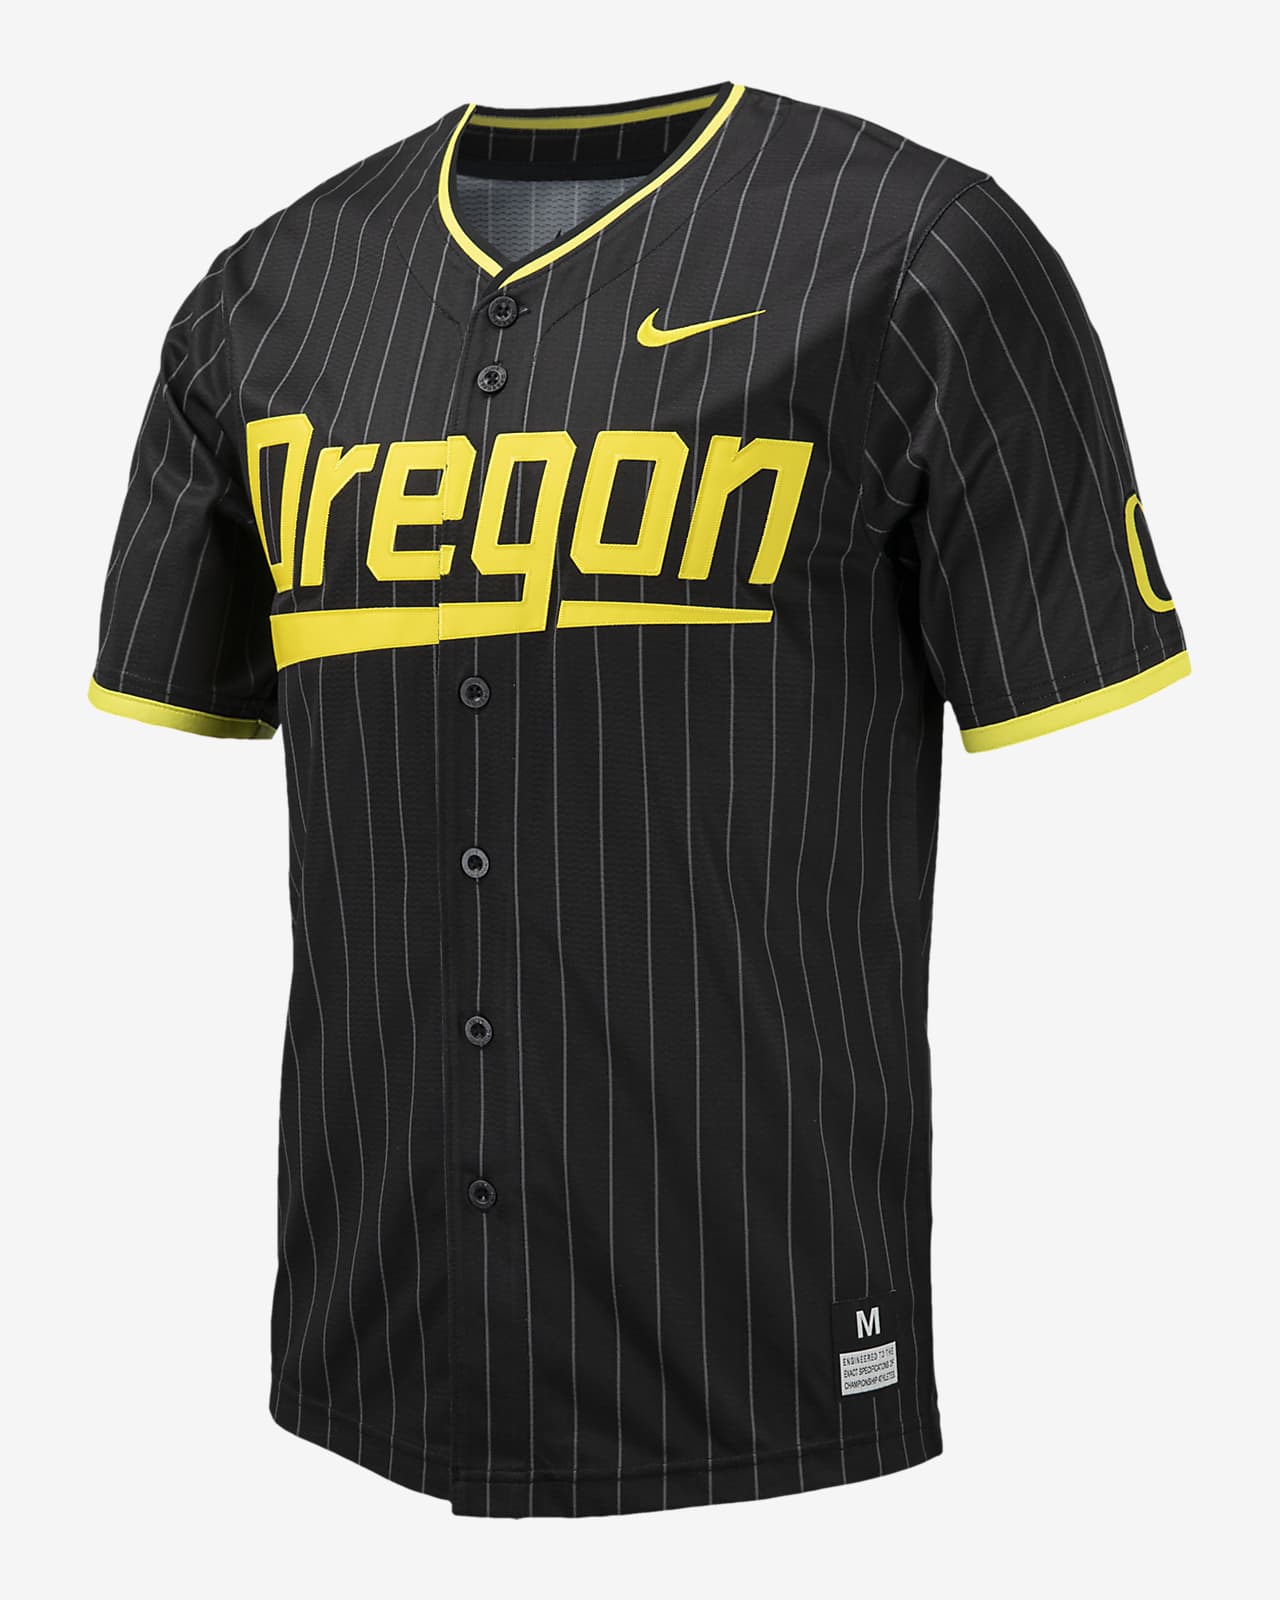 Oregon Men's Nike College Replica Baseball Jersey